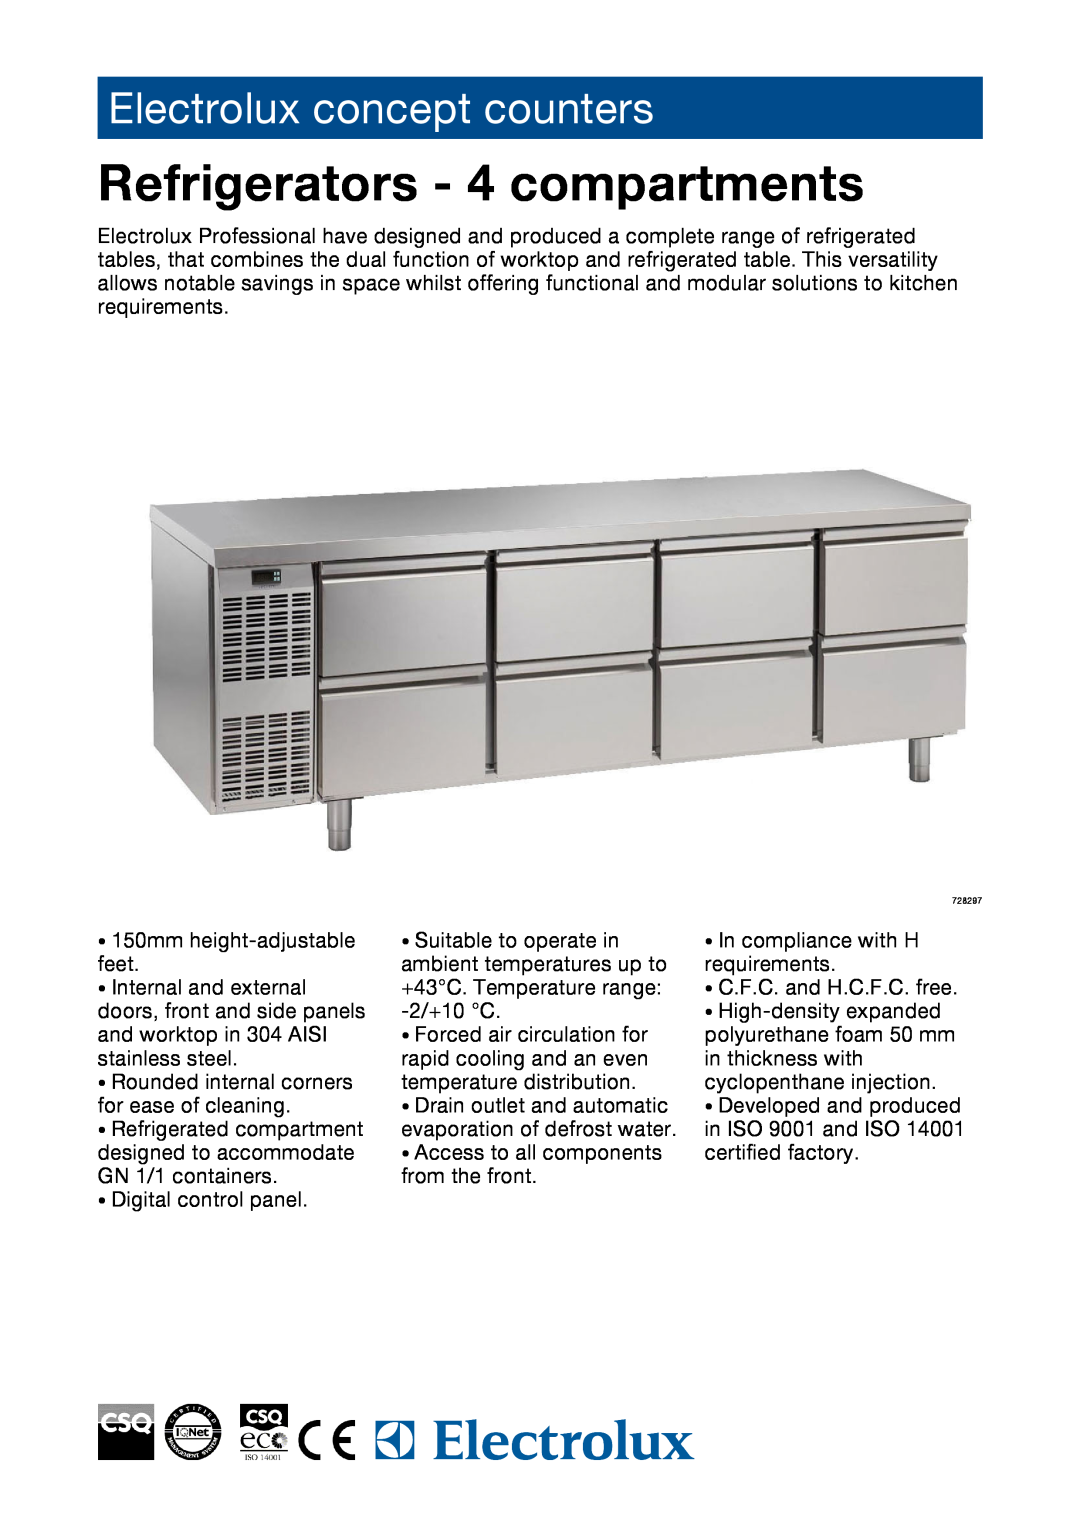 Electrolux 728243, 727107, 728245, 728246, 728244, HB2P4C manual Refrigerators - 4 compartments, Electrolux concept counters 